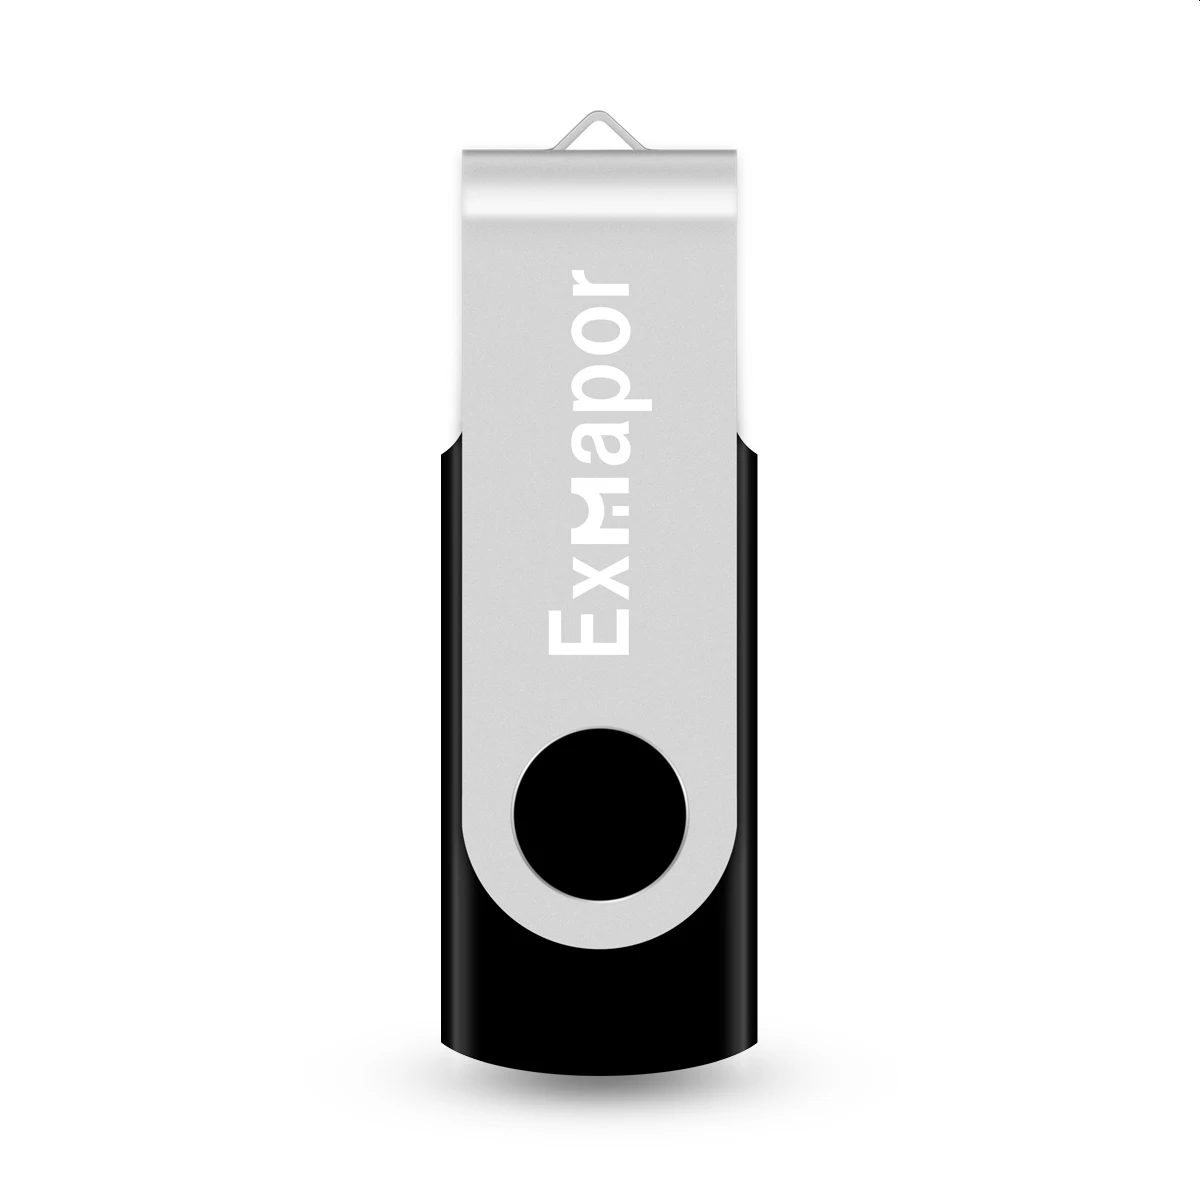 

Exmapor 8GB USB 2.0 Flash Drives Swivel 8 GB Thumb Drives Memory Sticks Jump Drive Zip Drive with Led Indicator Black